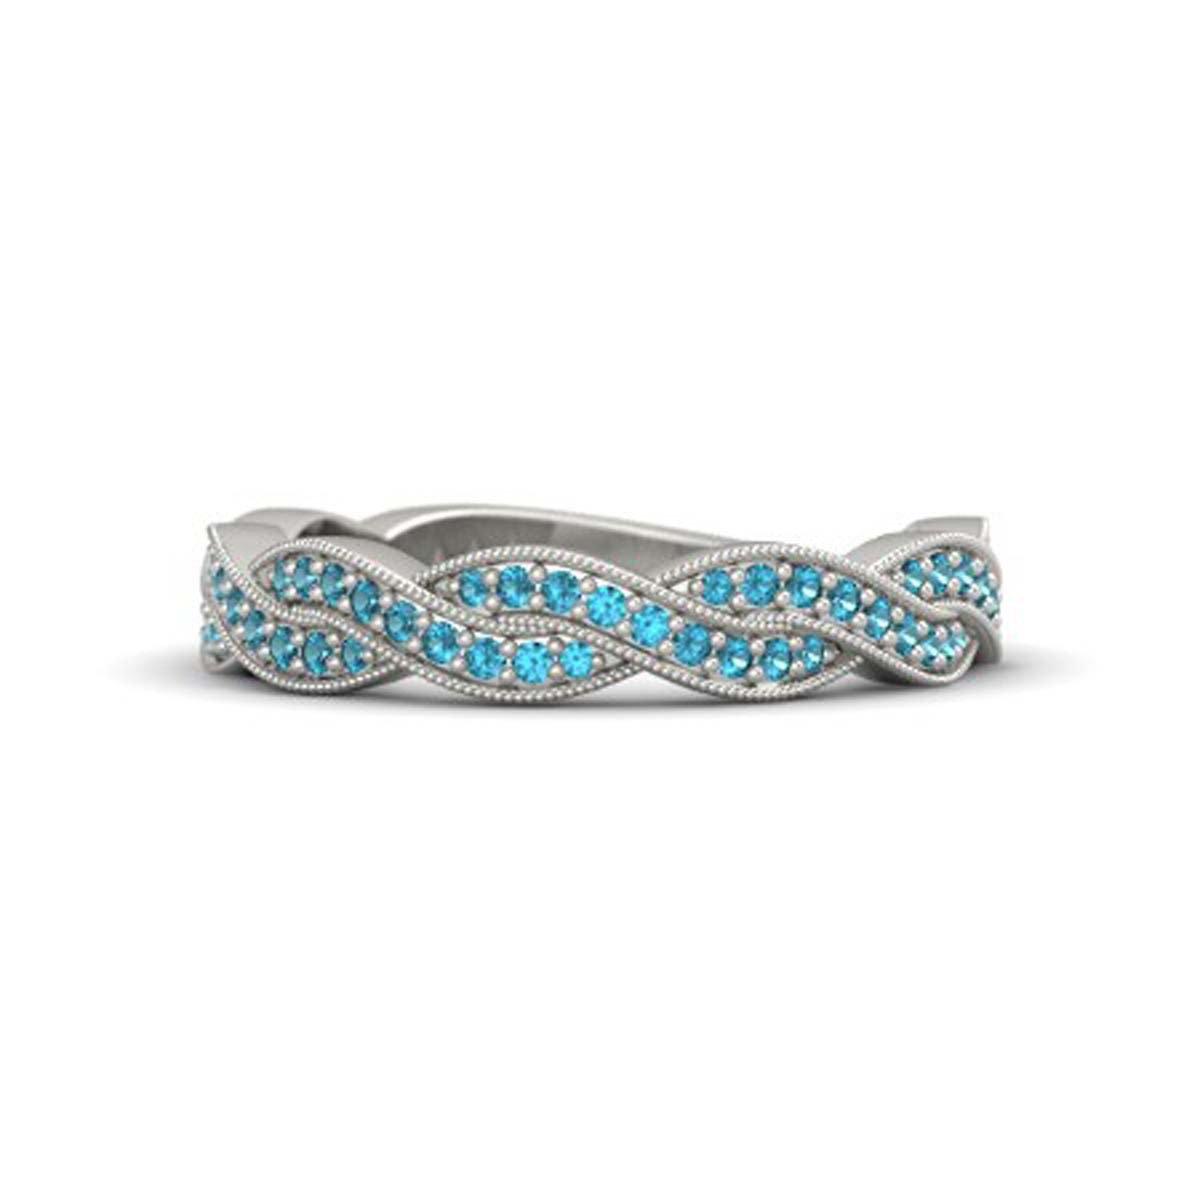 Samsfashion - London blue topaz 14k white gp milgrain wedding band engagement ring